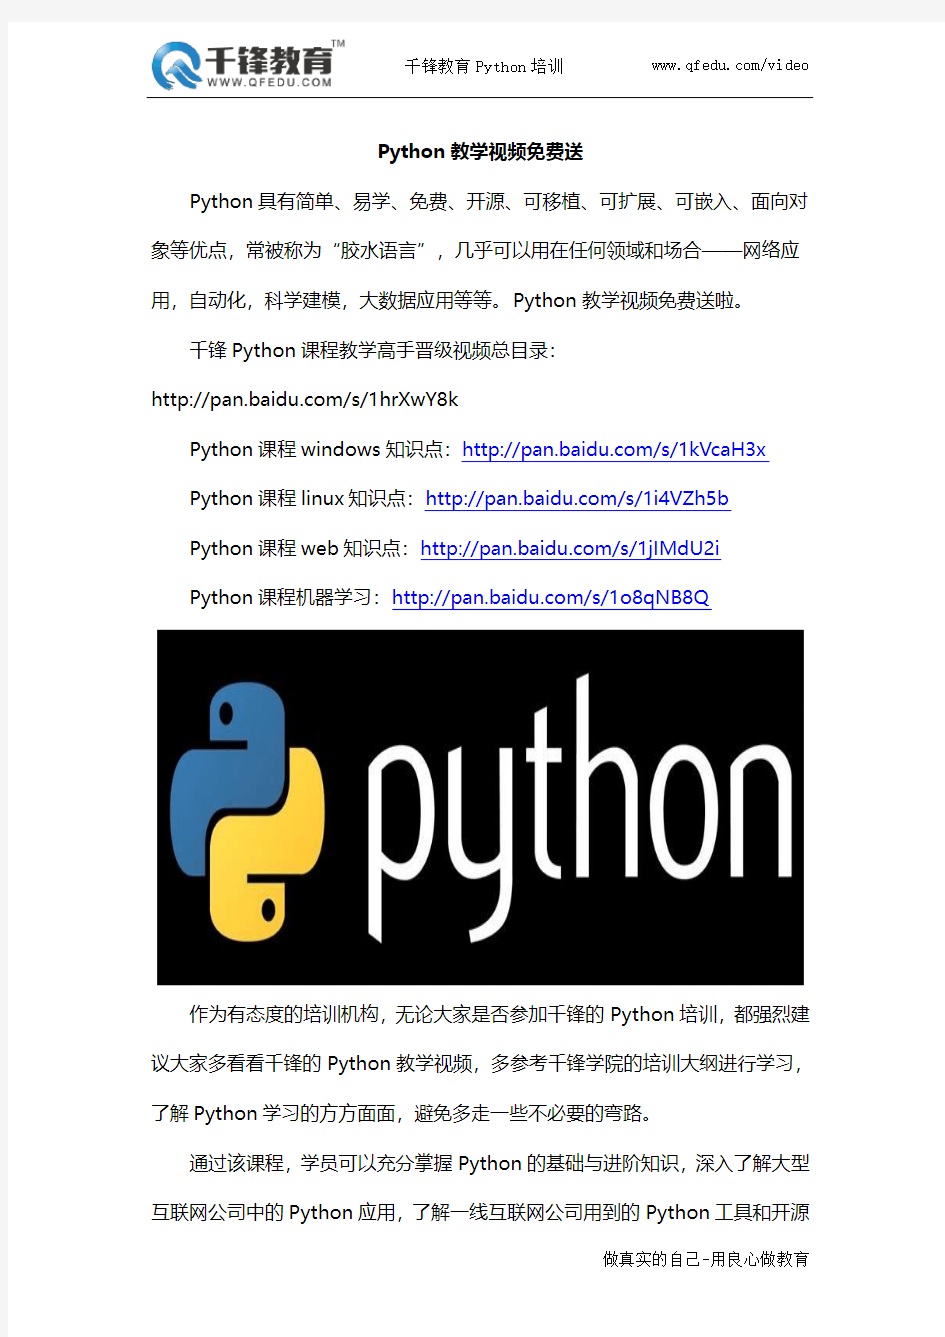 Python教学视频免费送